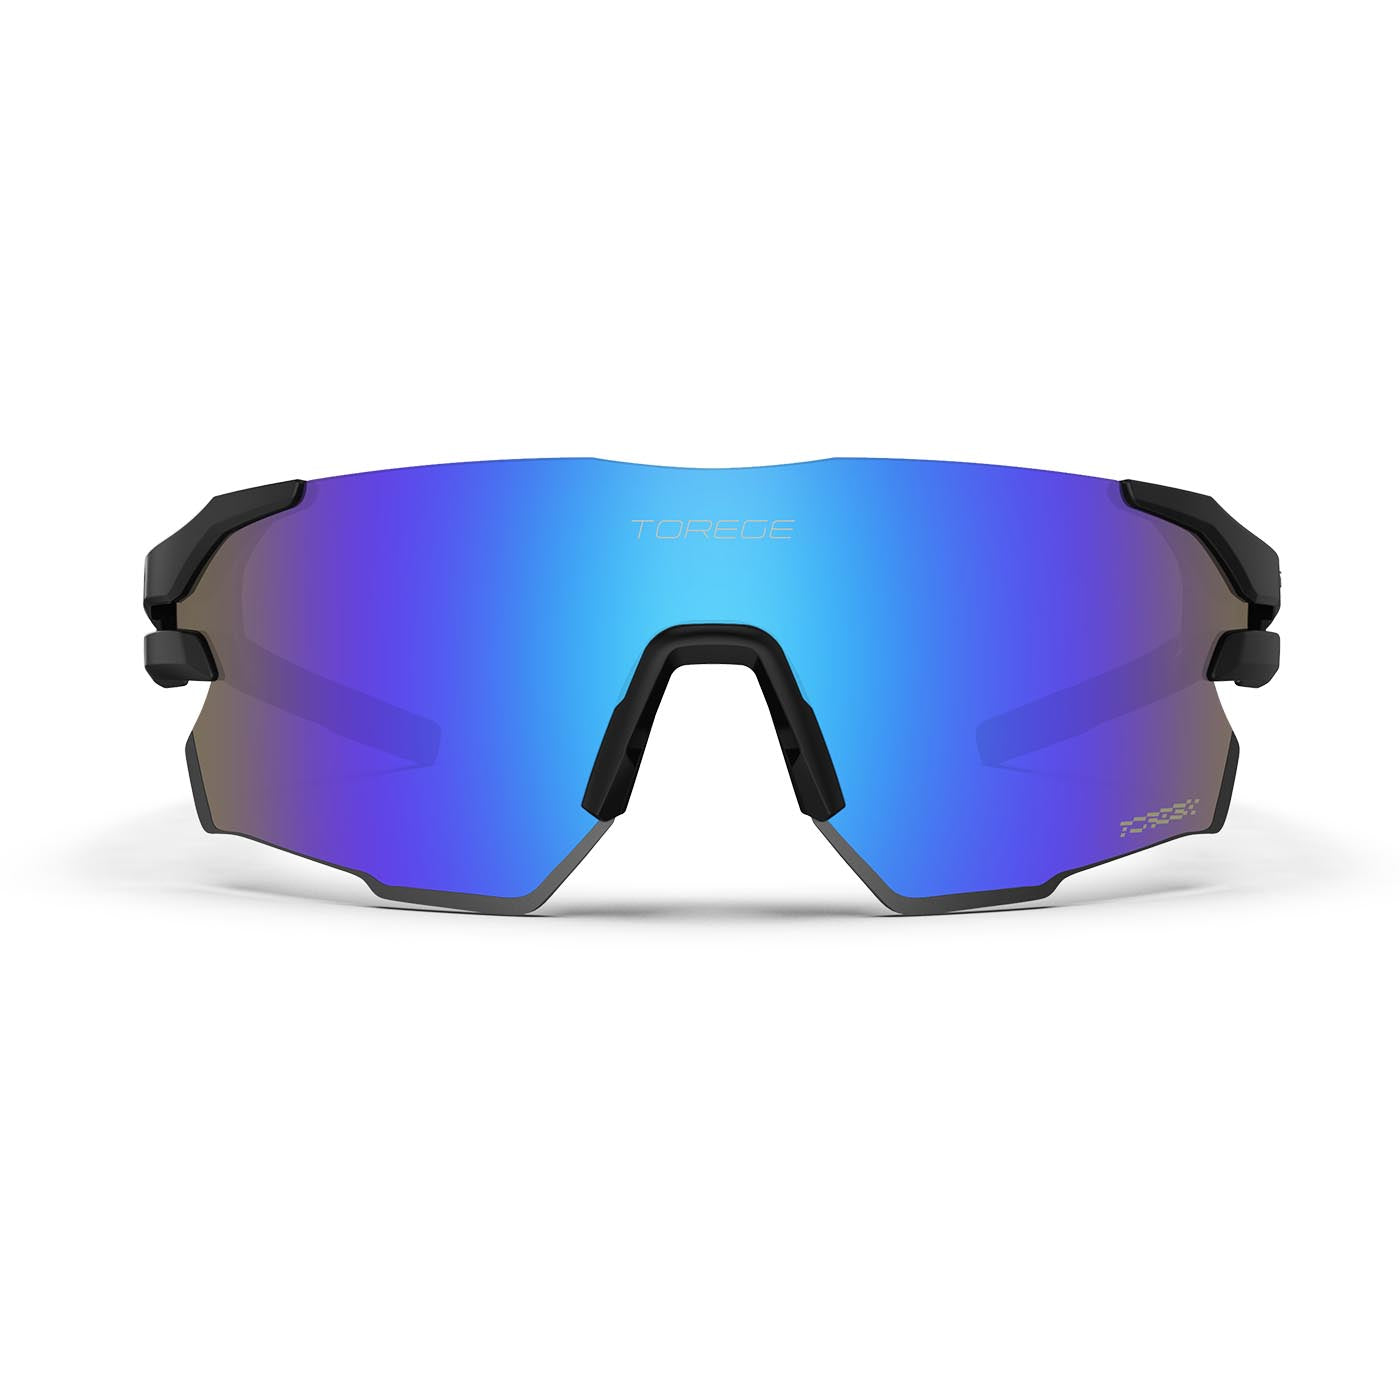 Clarity Sports Sunglasses - Black Frame & Toriex Blue Lens Mirror